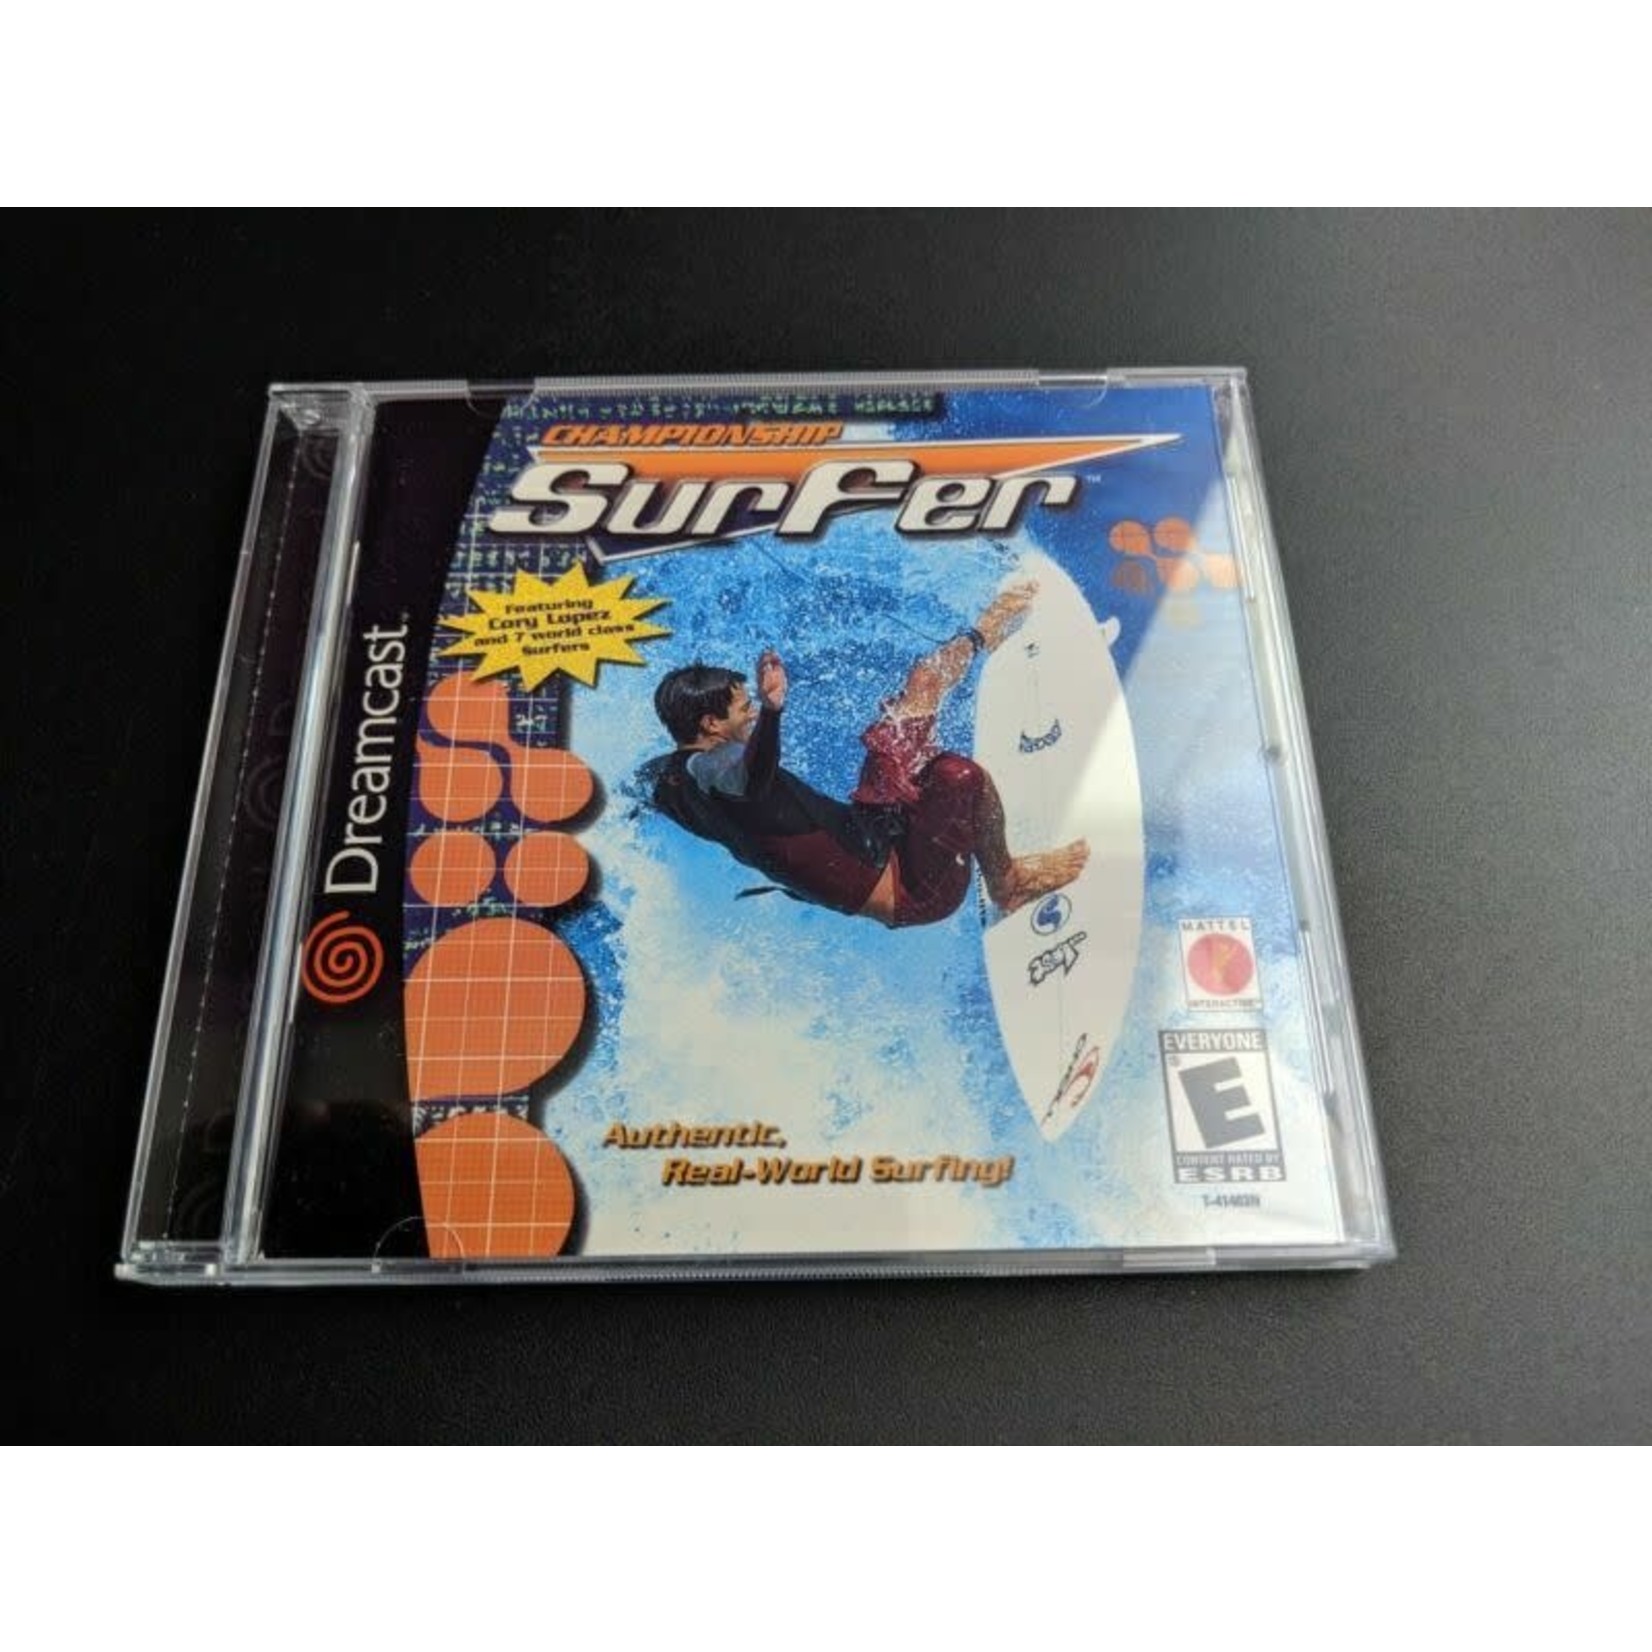 SDCU-Championship Surfer